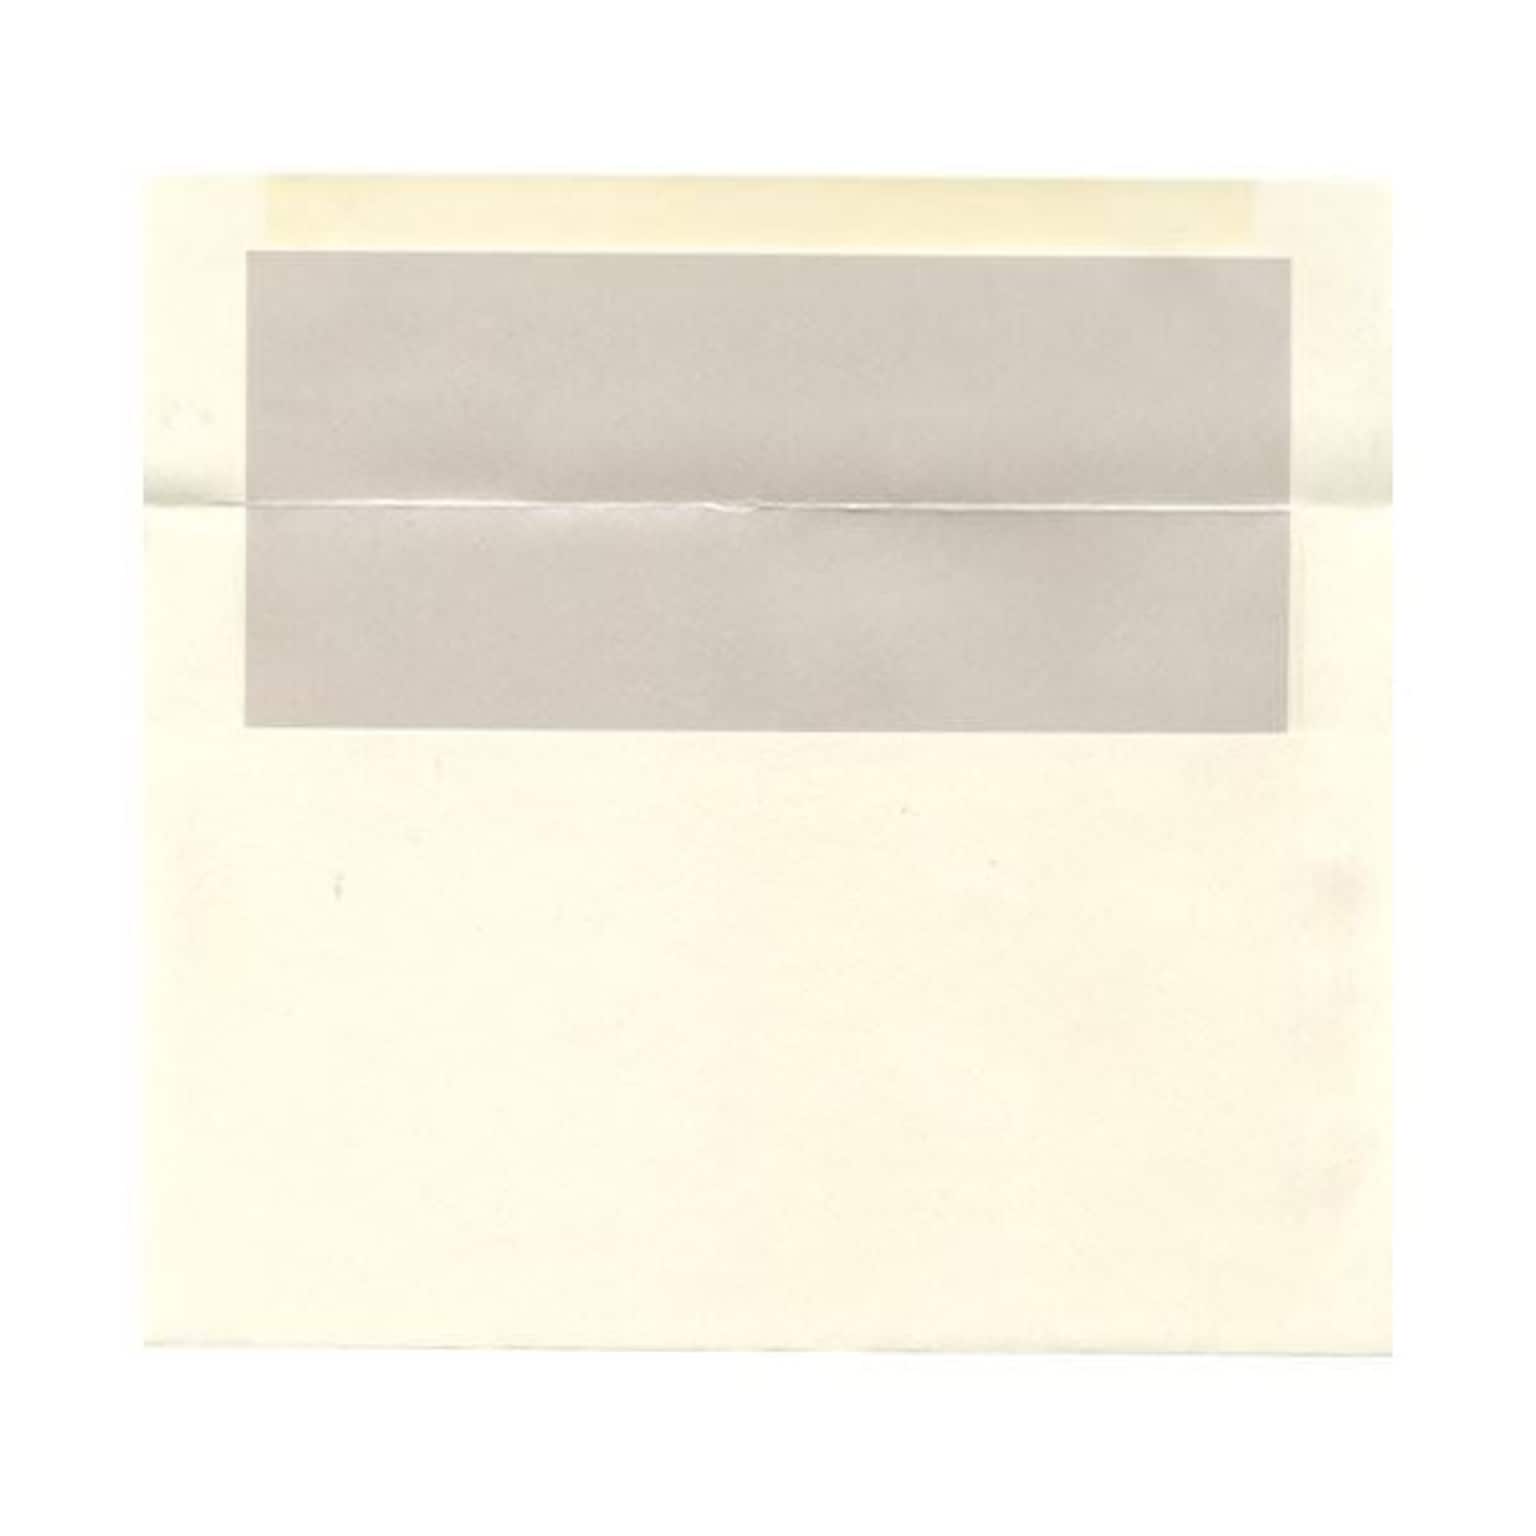 JAM Paper A9 Foil Lined Invitation Envelopes, 5.75 x 8.75, Ivory with Ivory Foil, 50/Pack (532412544I)